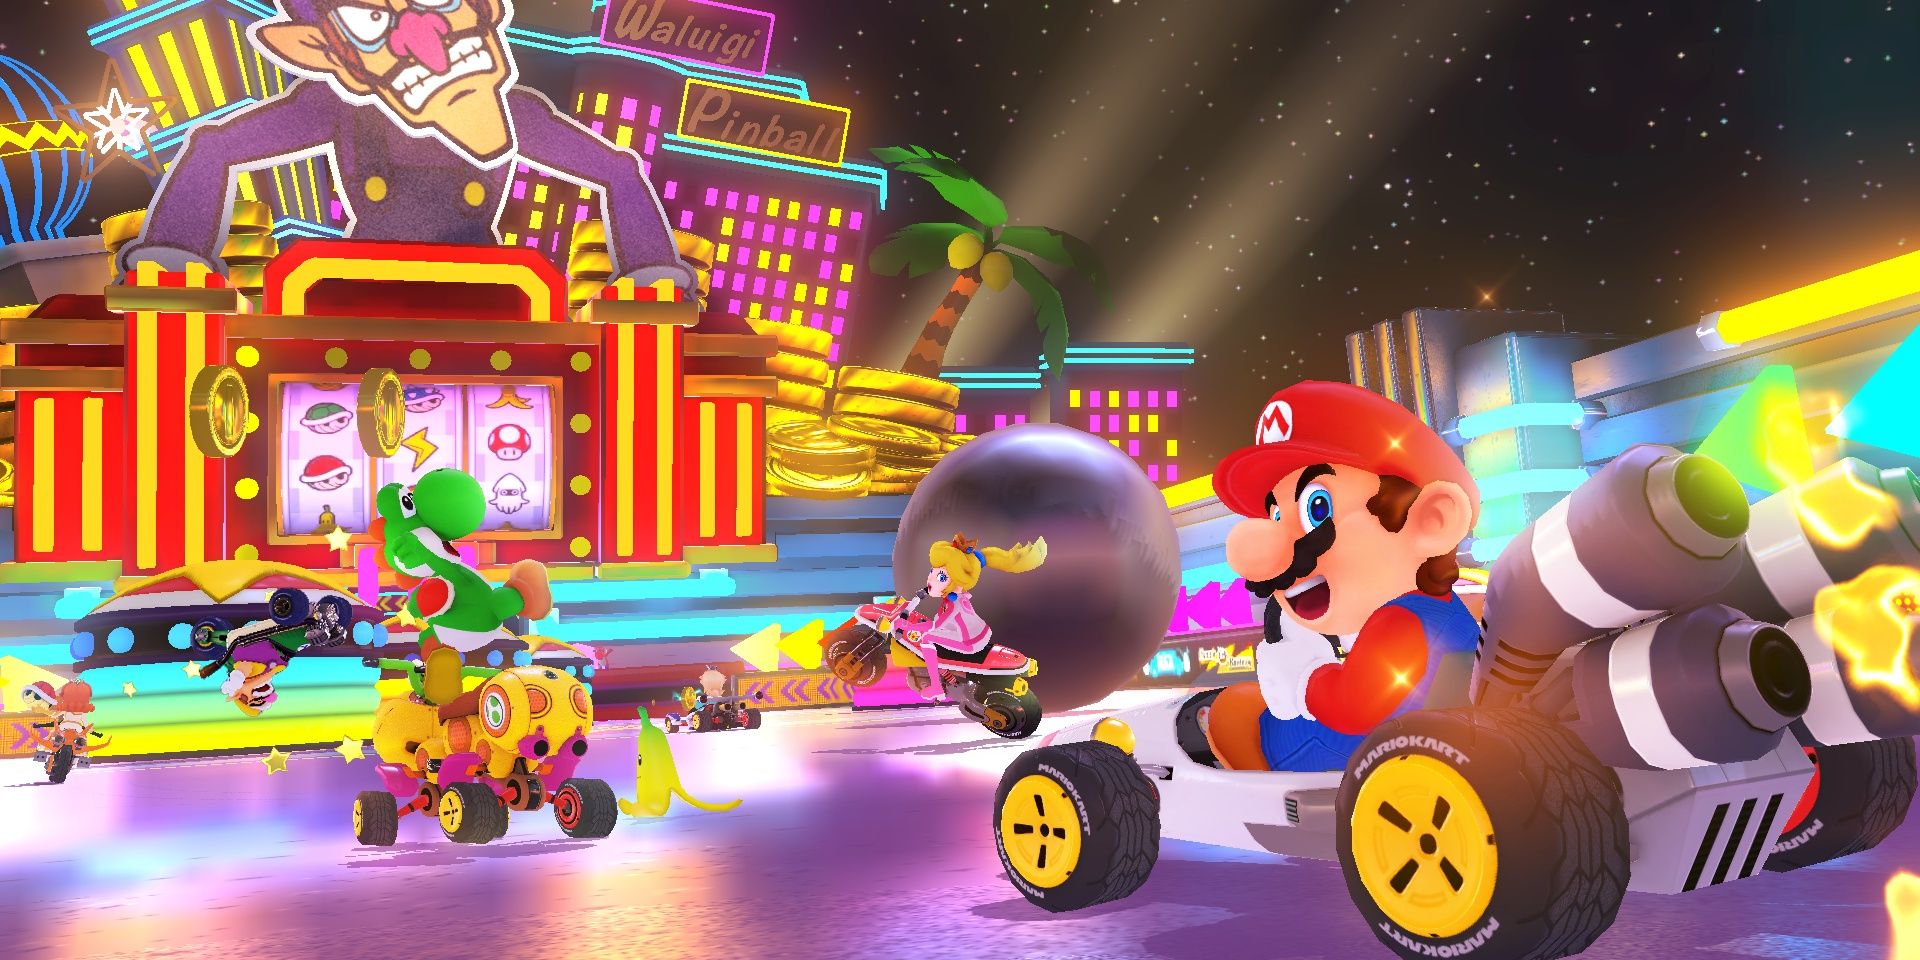 Mario, Yoshi, and Peach racing in Waluigi's course in Mario Kart 8